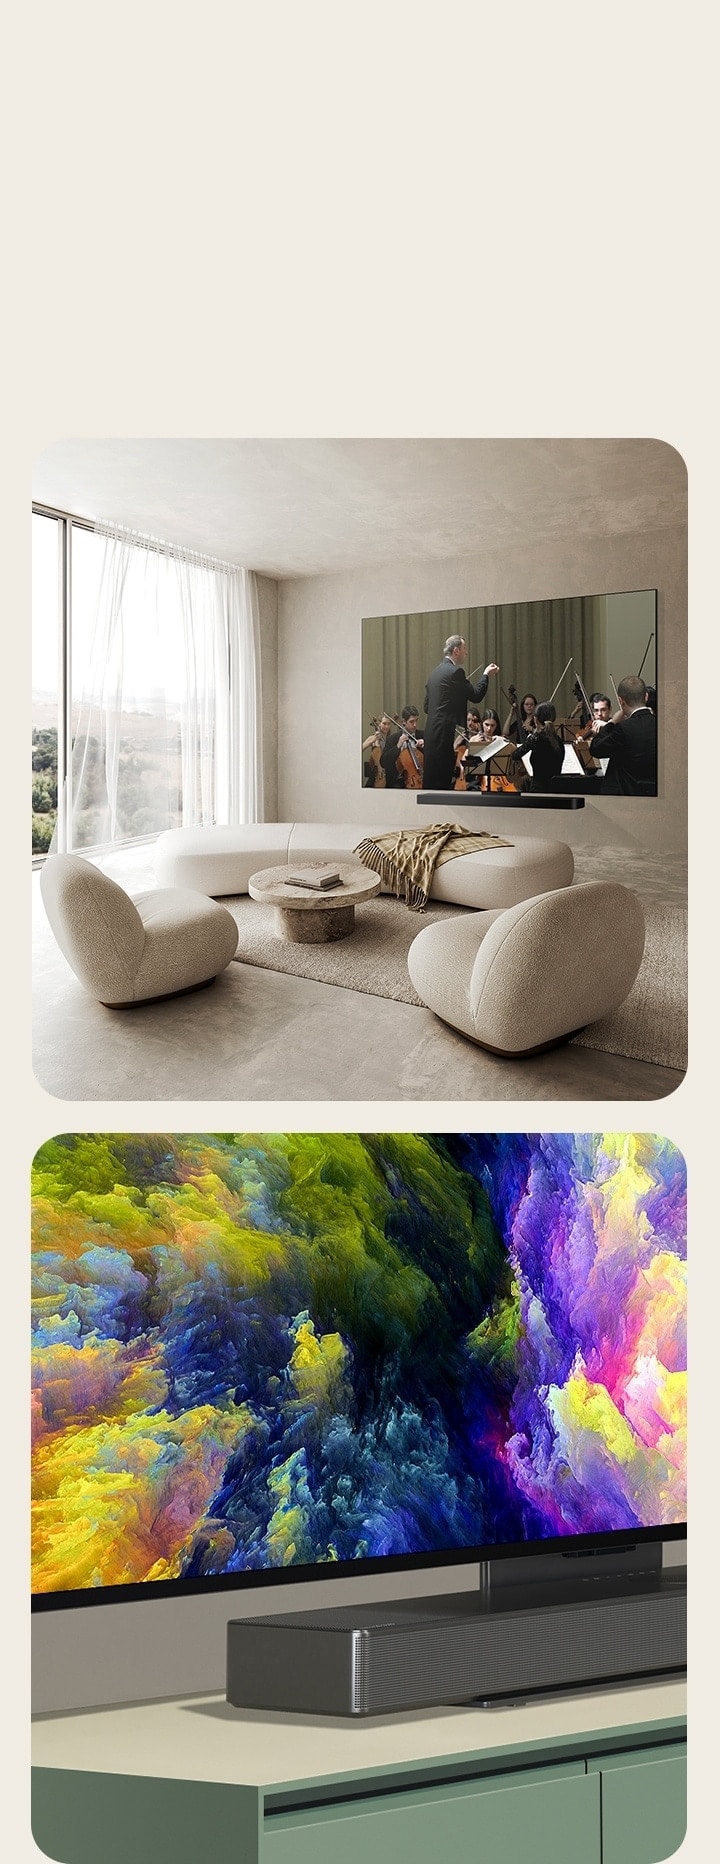 Perspektif miring di sudut bawah OLED C4 menampilkan karya seni abstrak di layar.  OLED C4 dan LG Soundbar di ruang tamu yang bersih menempel ke dinding dengan pertunjukan orkestra yang ditayangkan di layar.